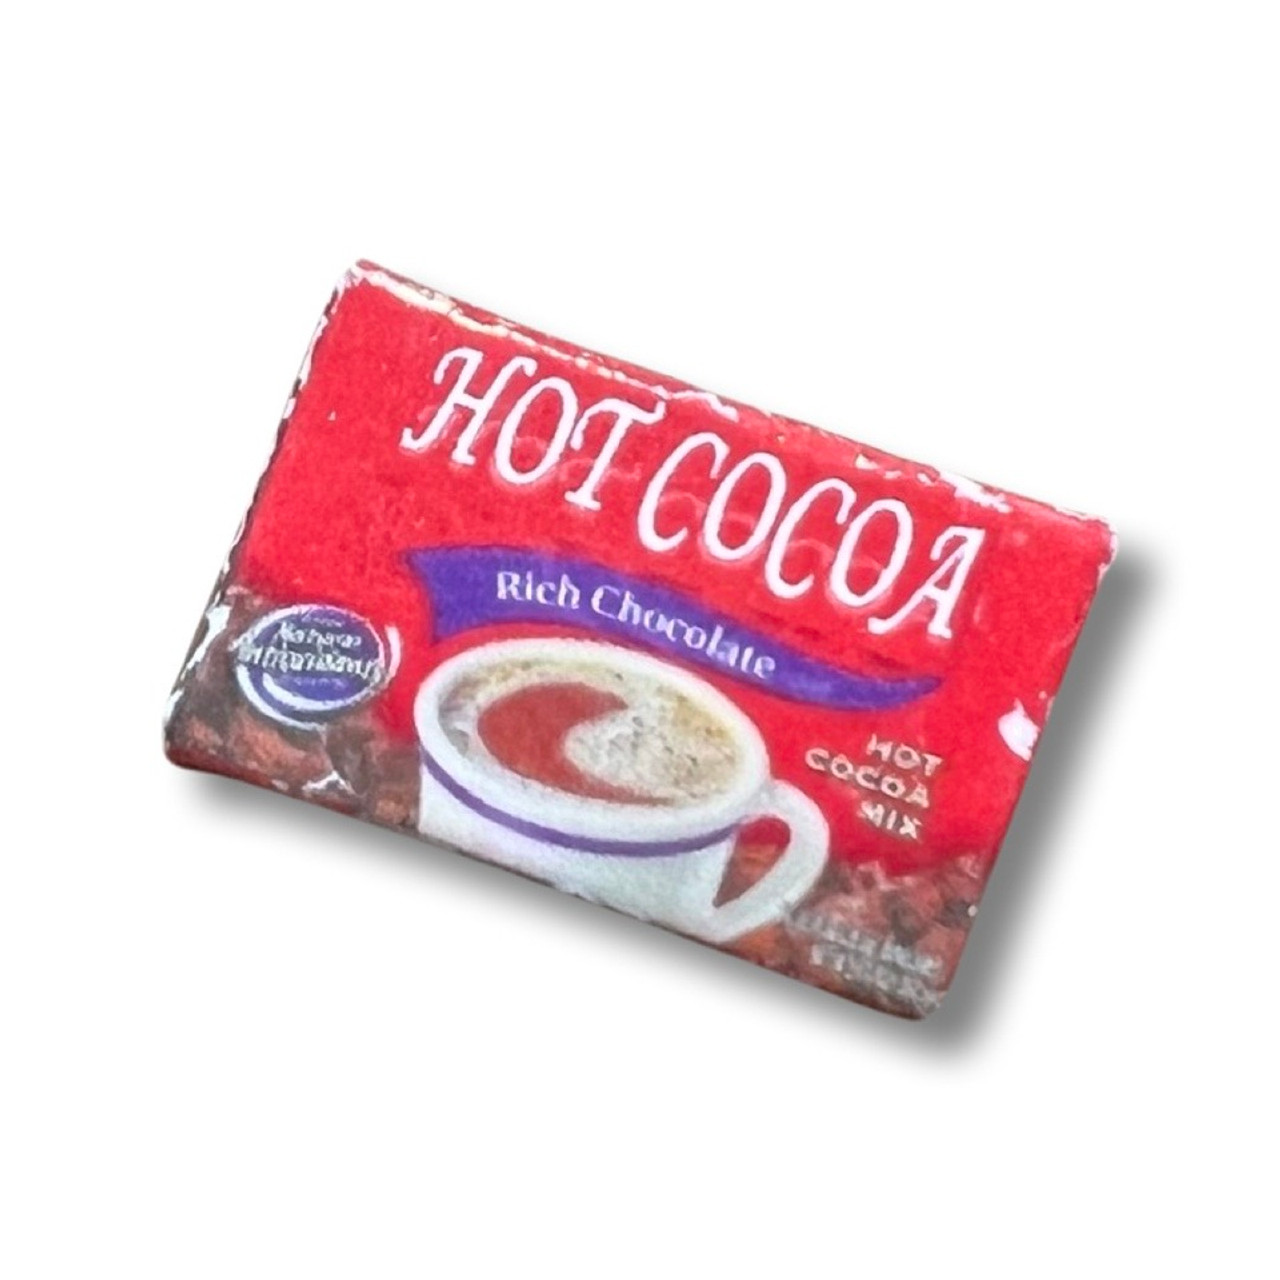 CIMIG037 - Hot Cocoa (chocolate) Box Mix